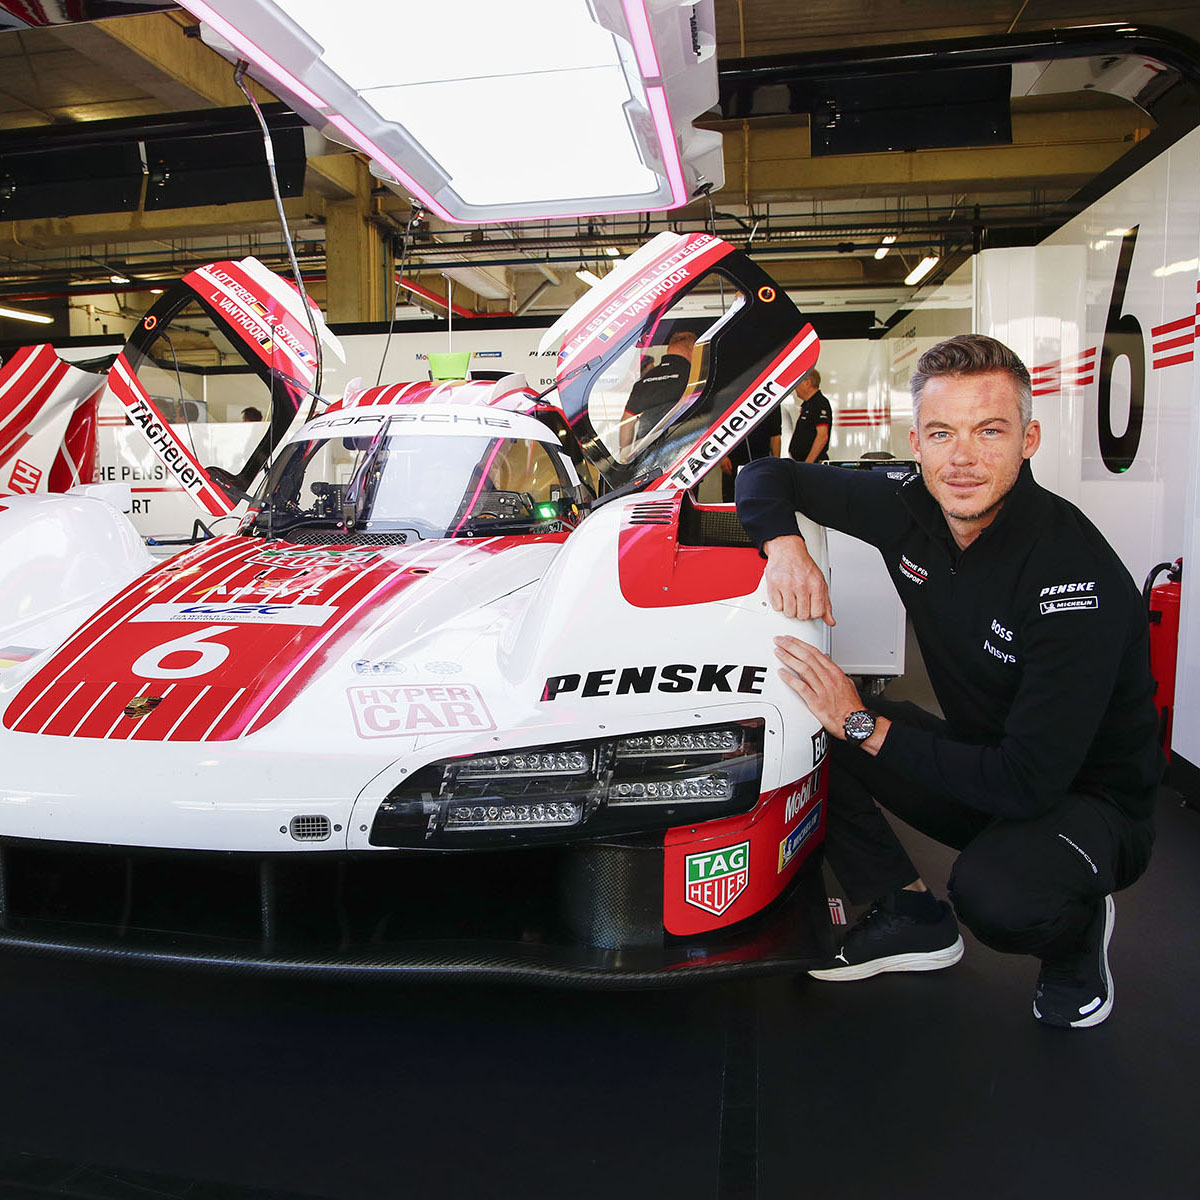 André Lotterer will mit Porsche Le Mans gewinnen